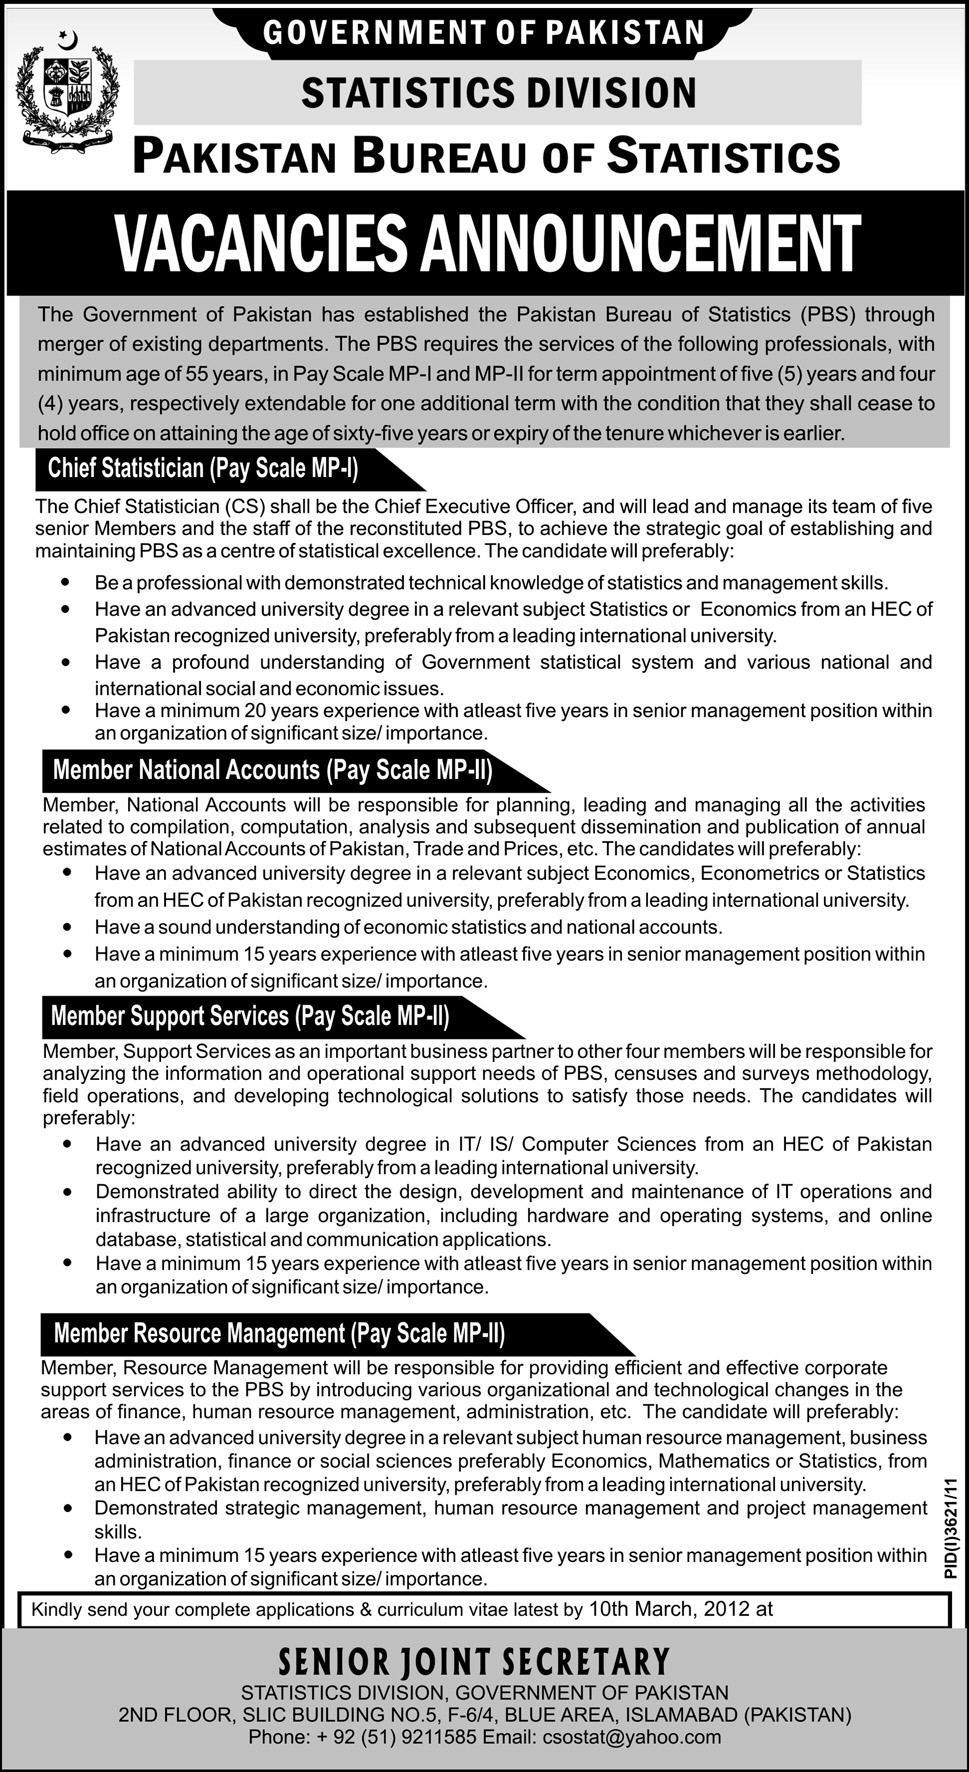 Government of Pakistan, Statistics Division, Pakistan Bureau of Statistics Jobs Opportunity